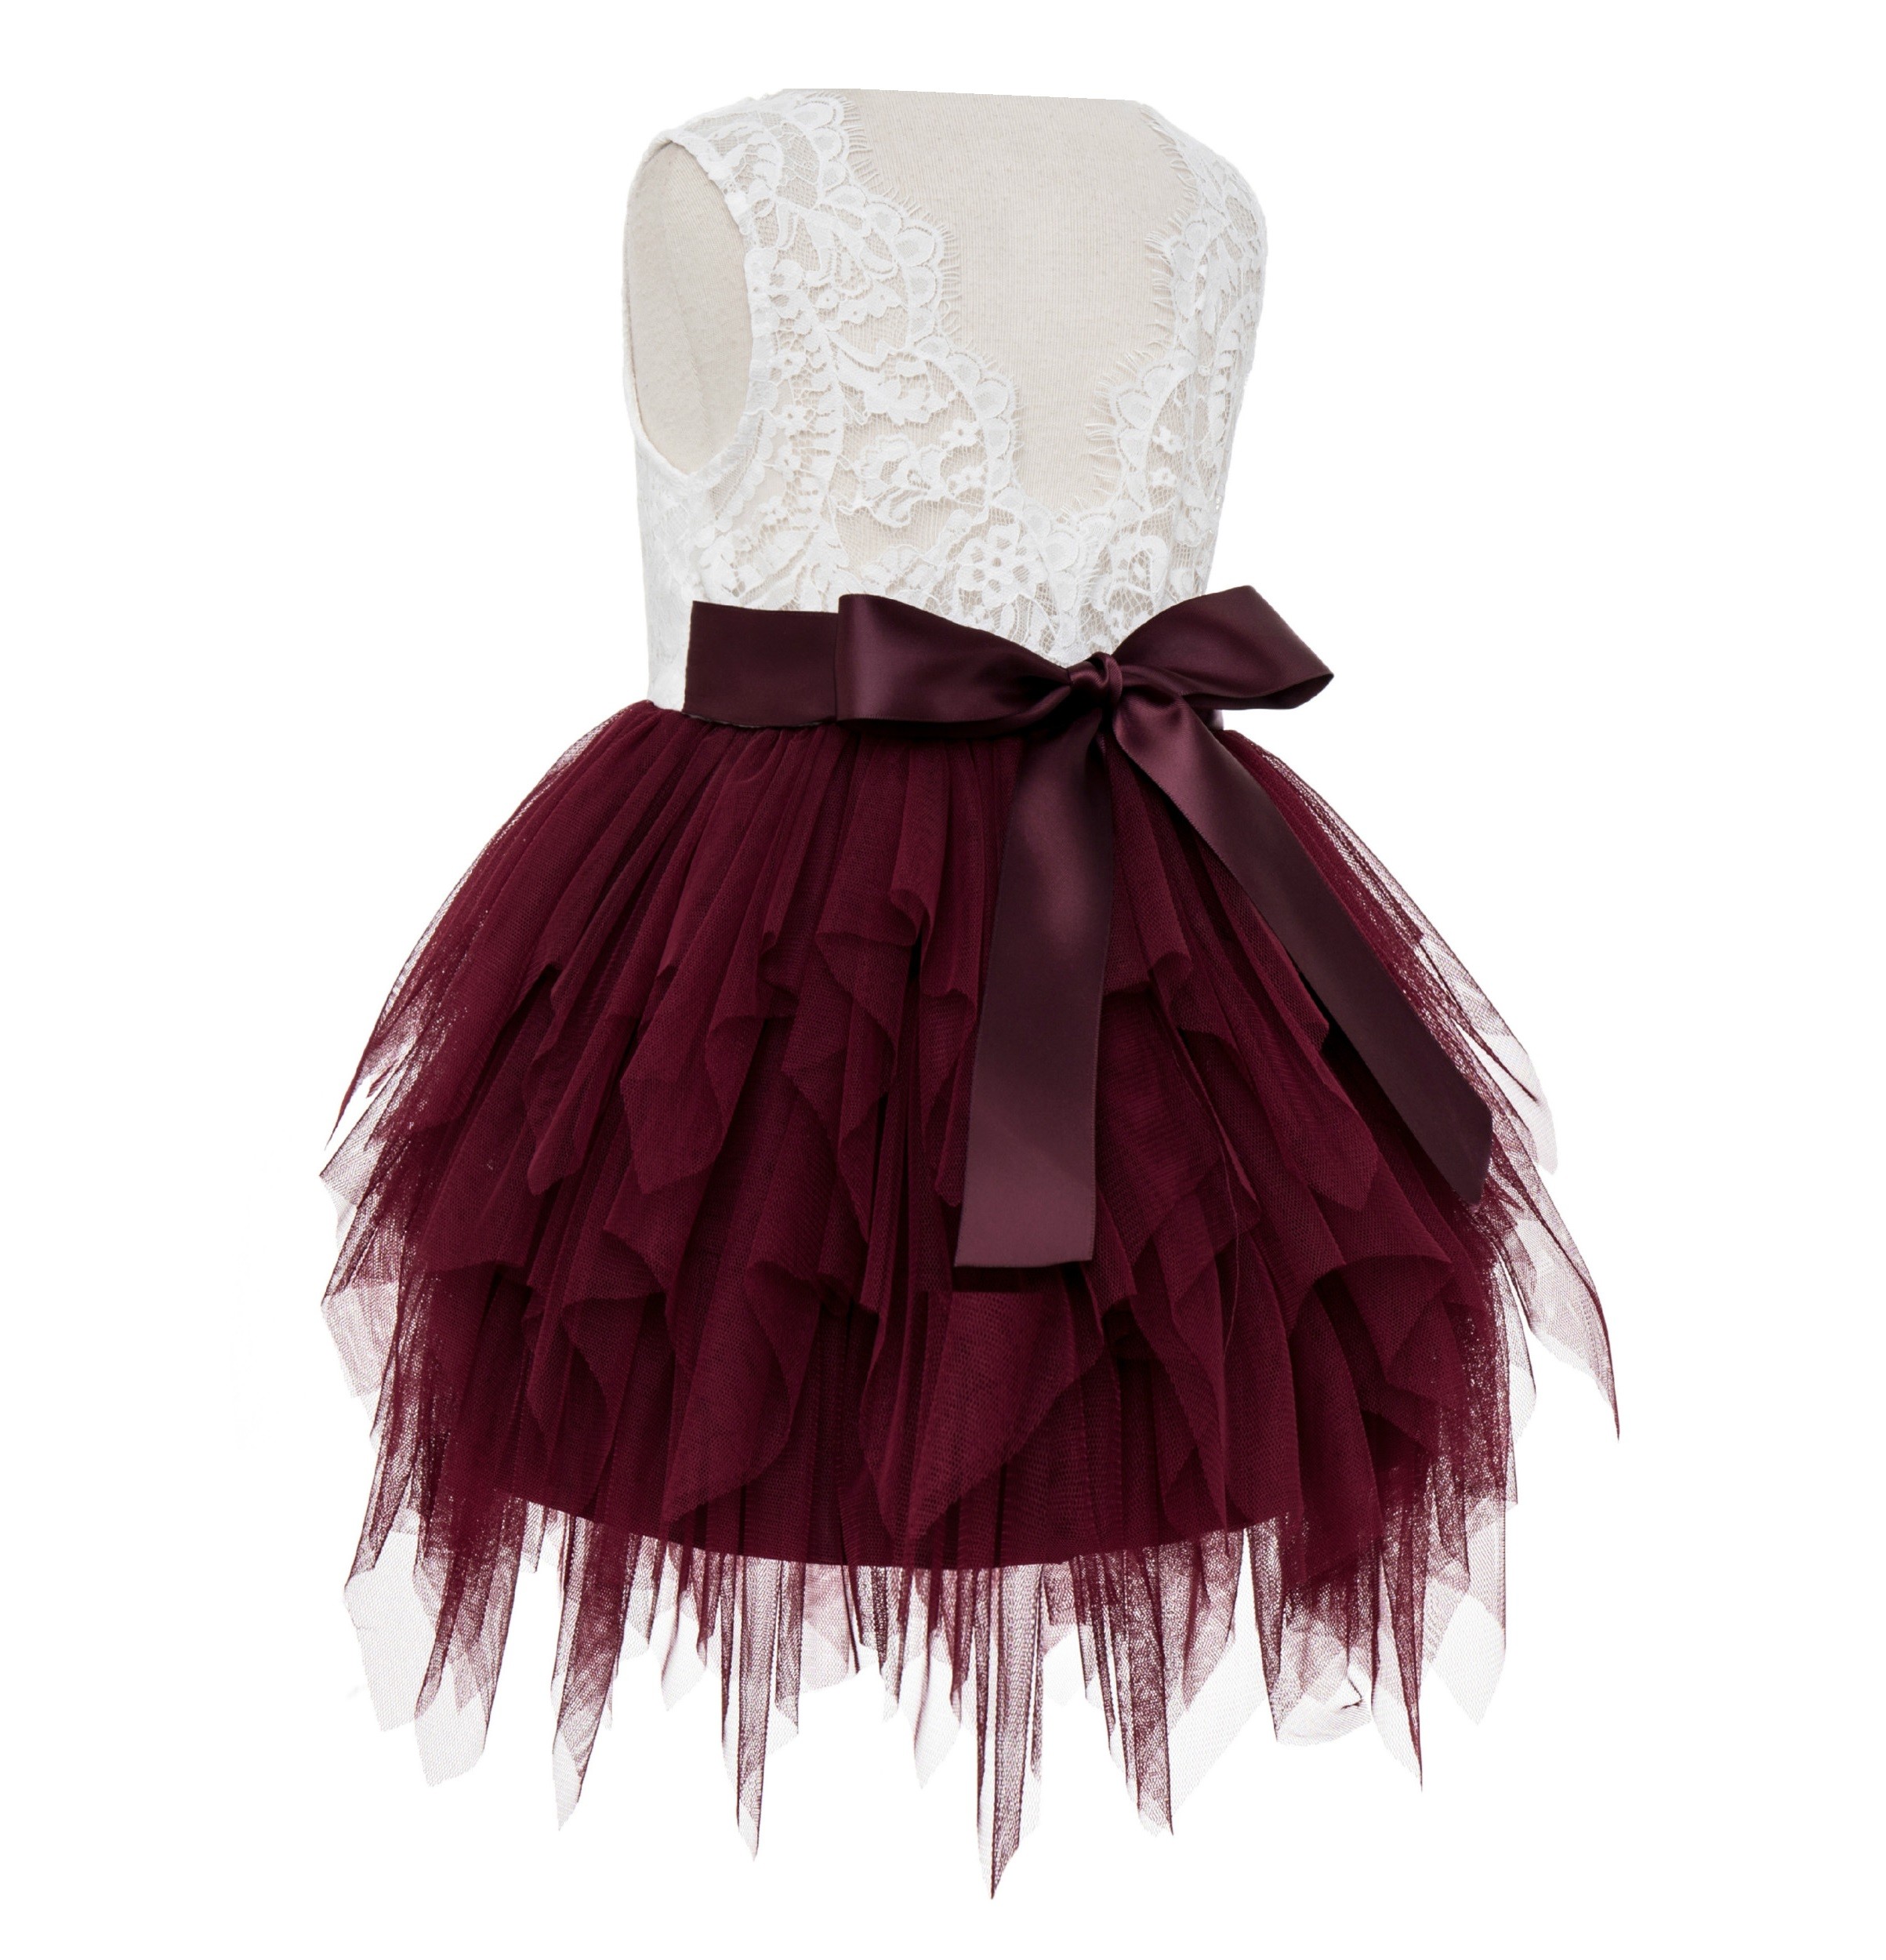 Burgundy Tiered Tulle Flower Girl Dress Lace Back Dress LG6